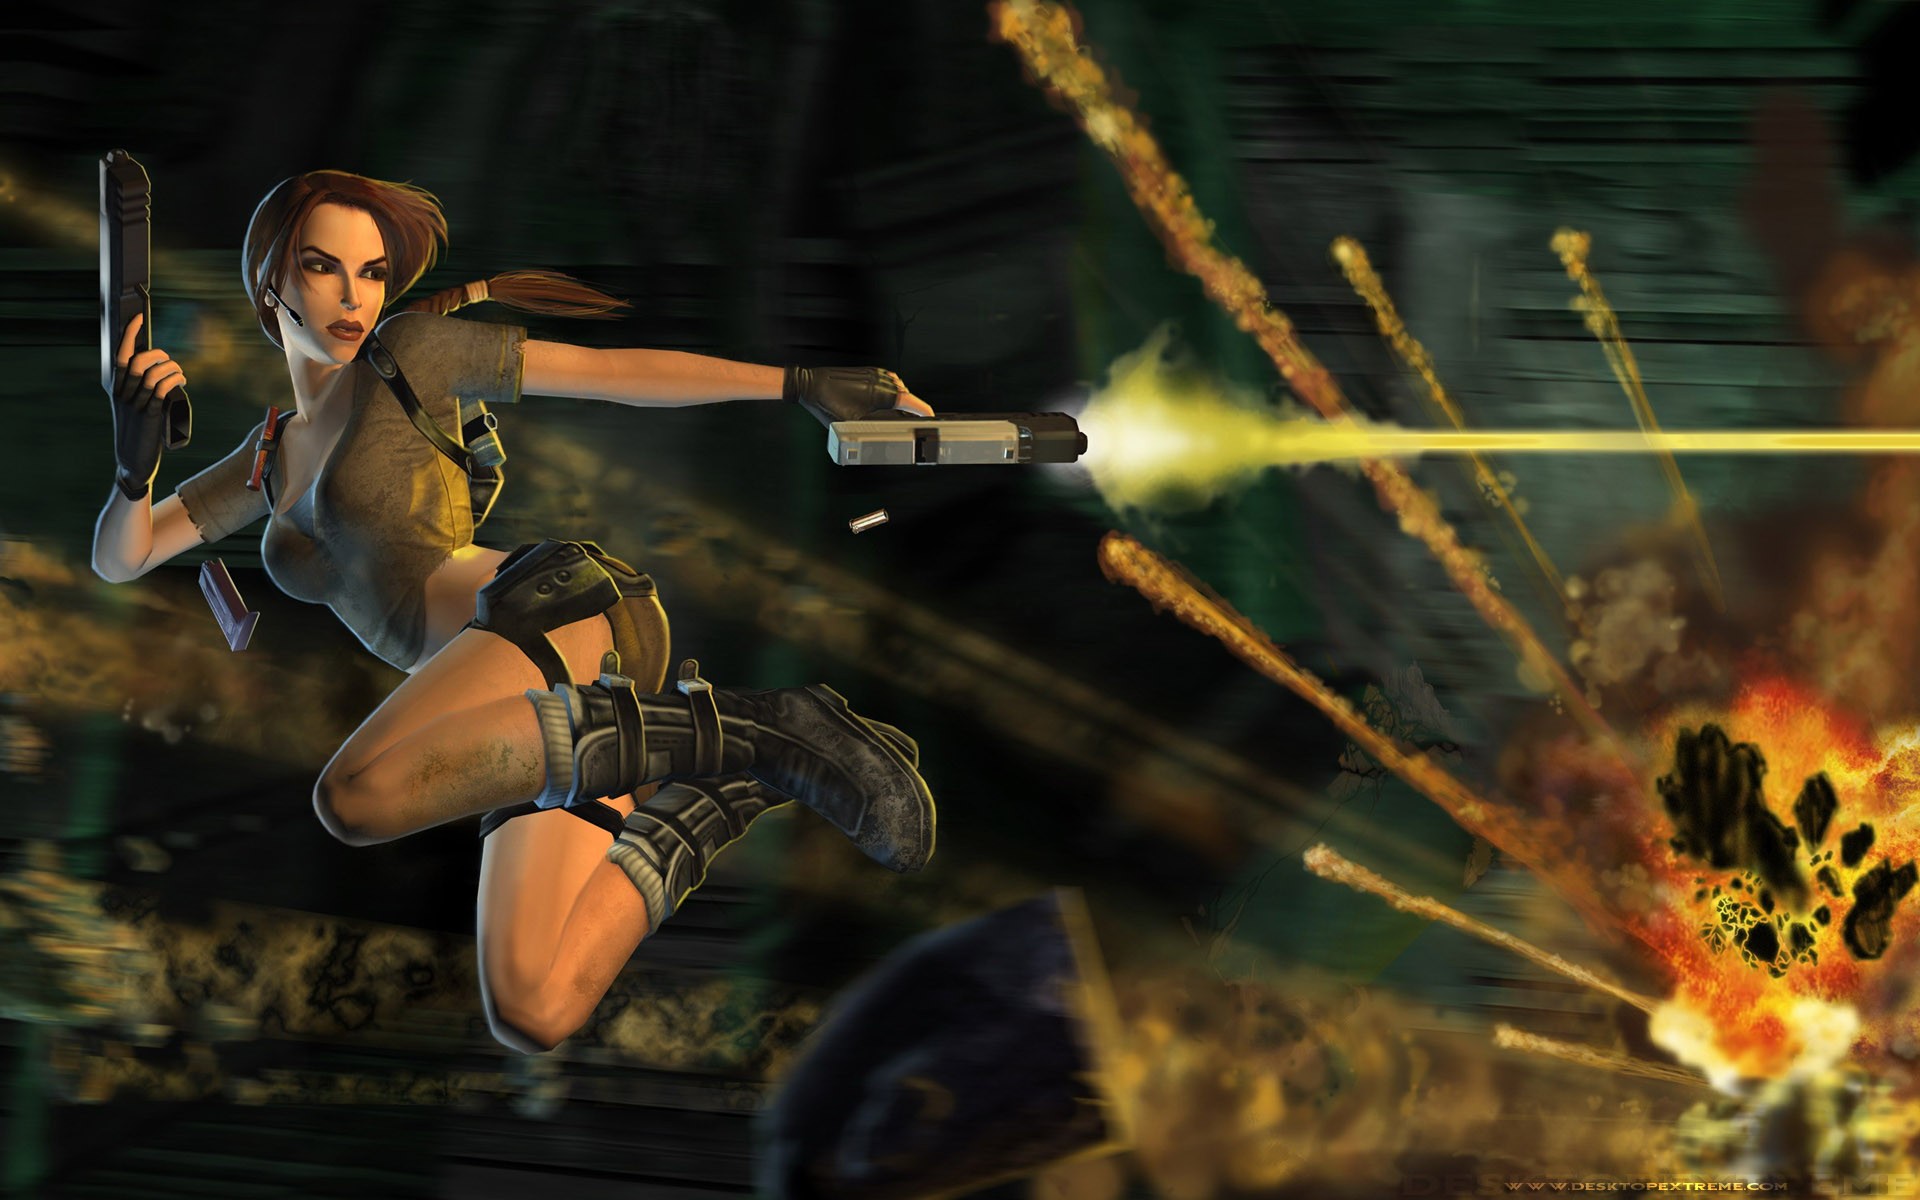 General 1920x1200 Tomb Raider video games Tomb Raider: Legend video game girls girls with guns gun dual wield Lara Croft (Tomb Raider) weapon Crystal Dynamics Square Enix video game characters